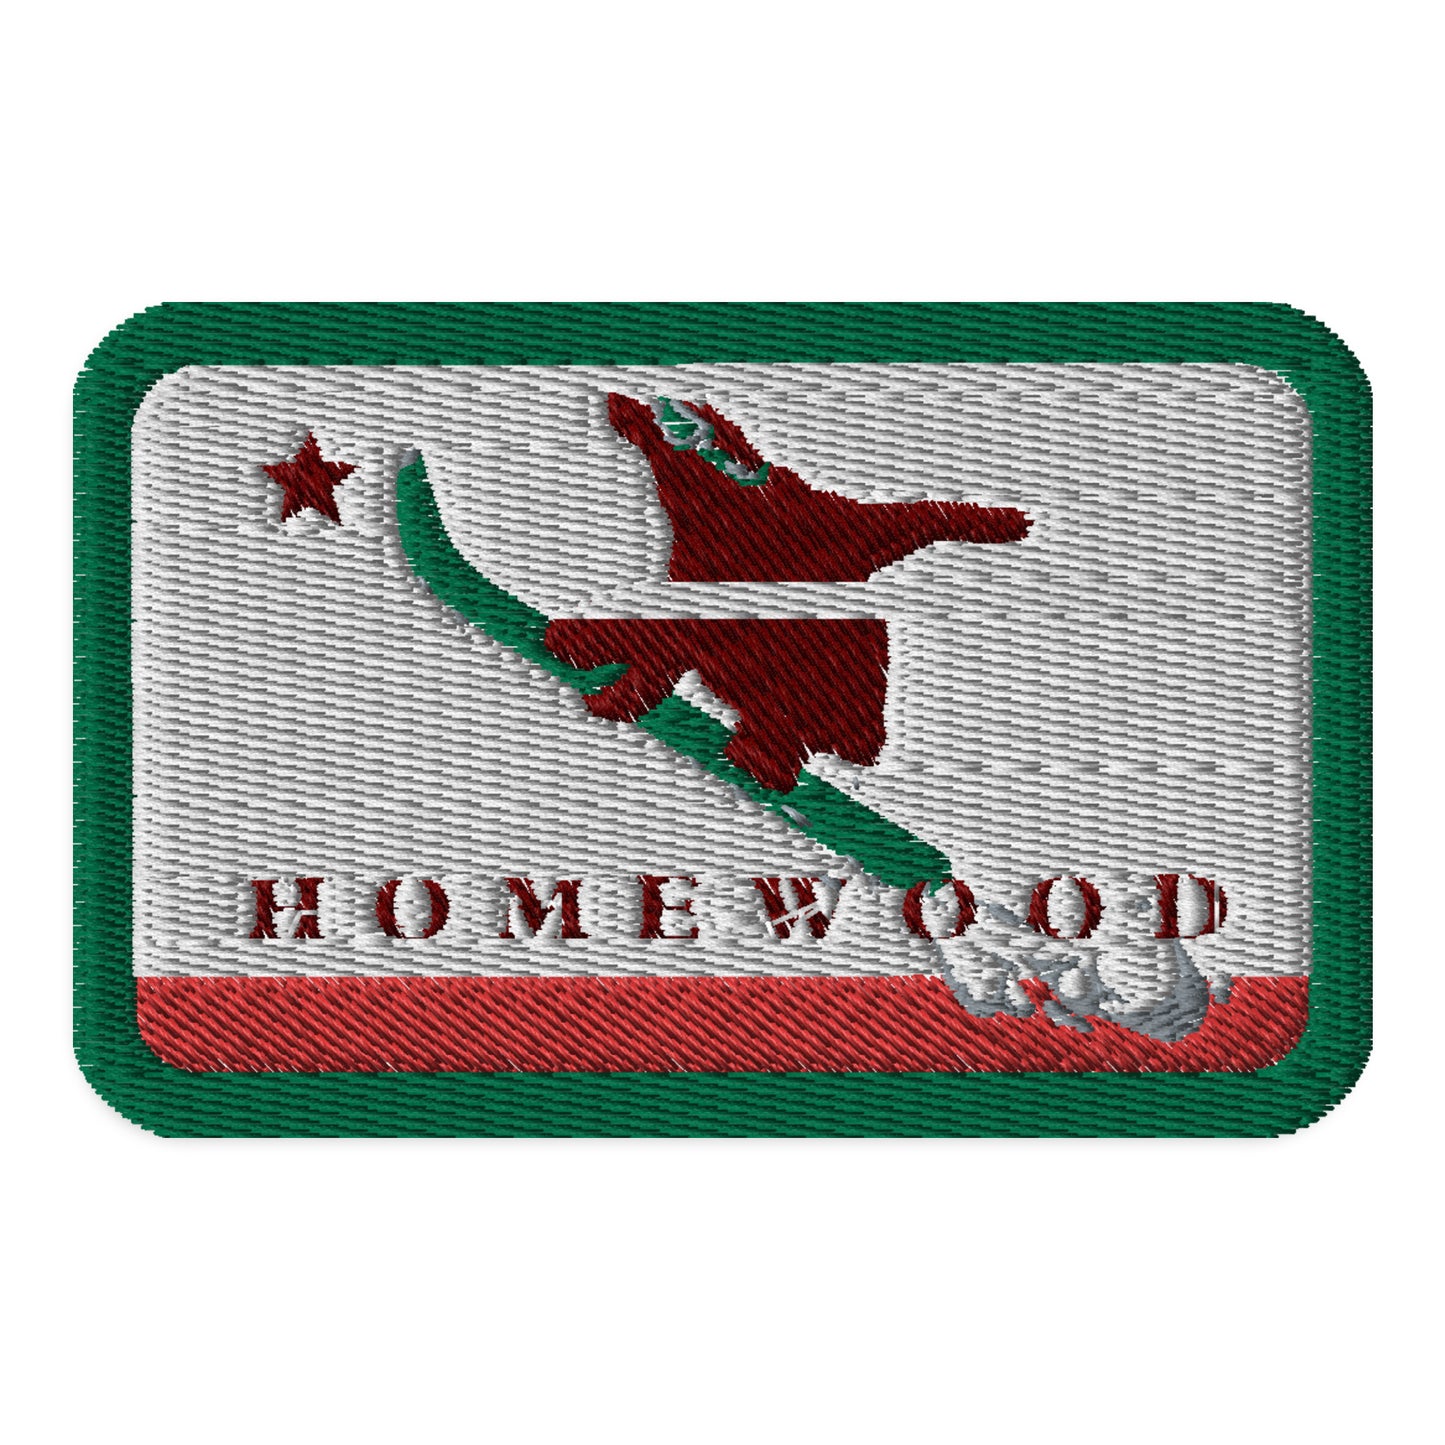 Homewood Snowboard Patch